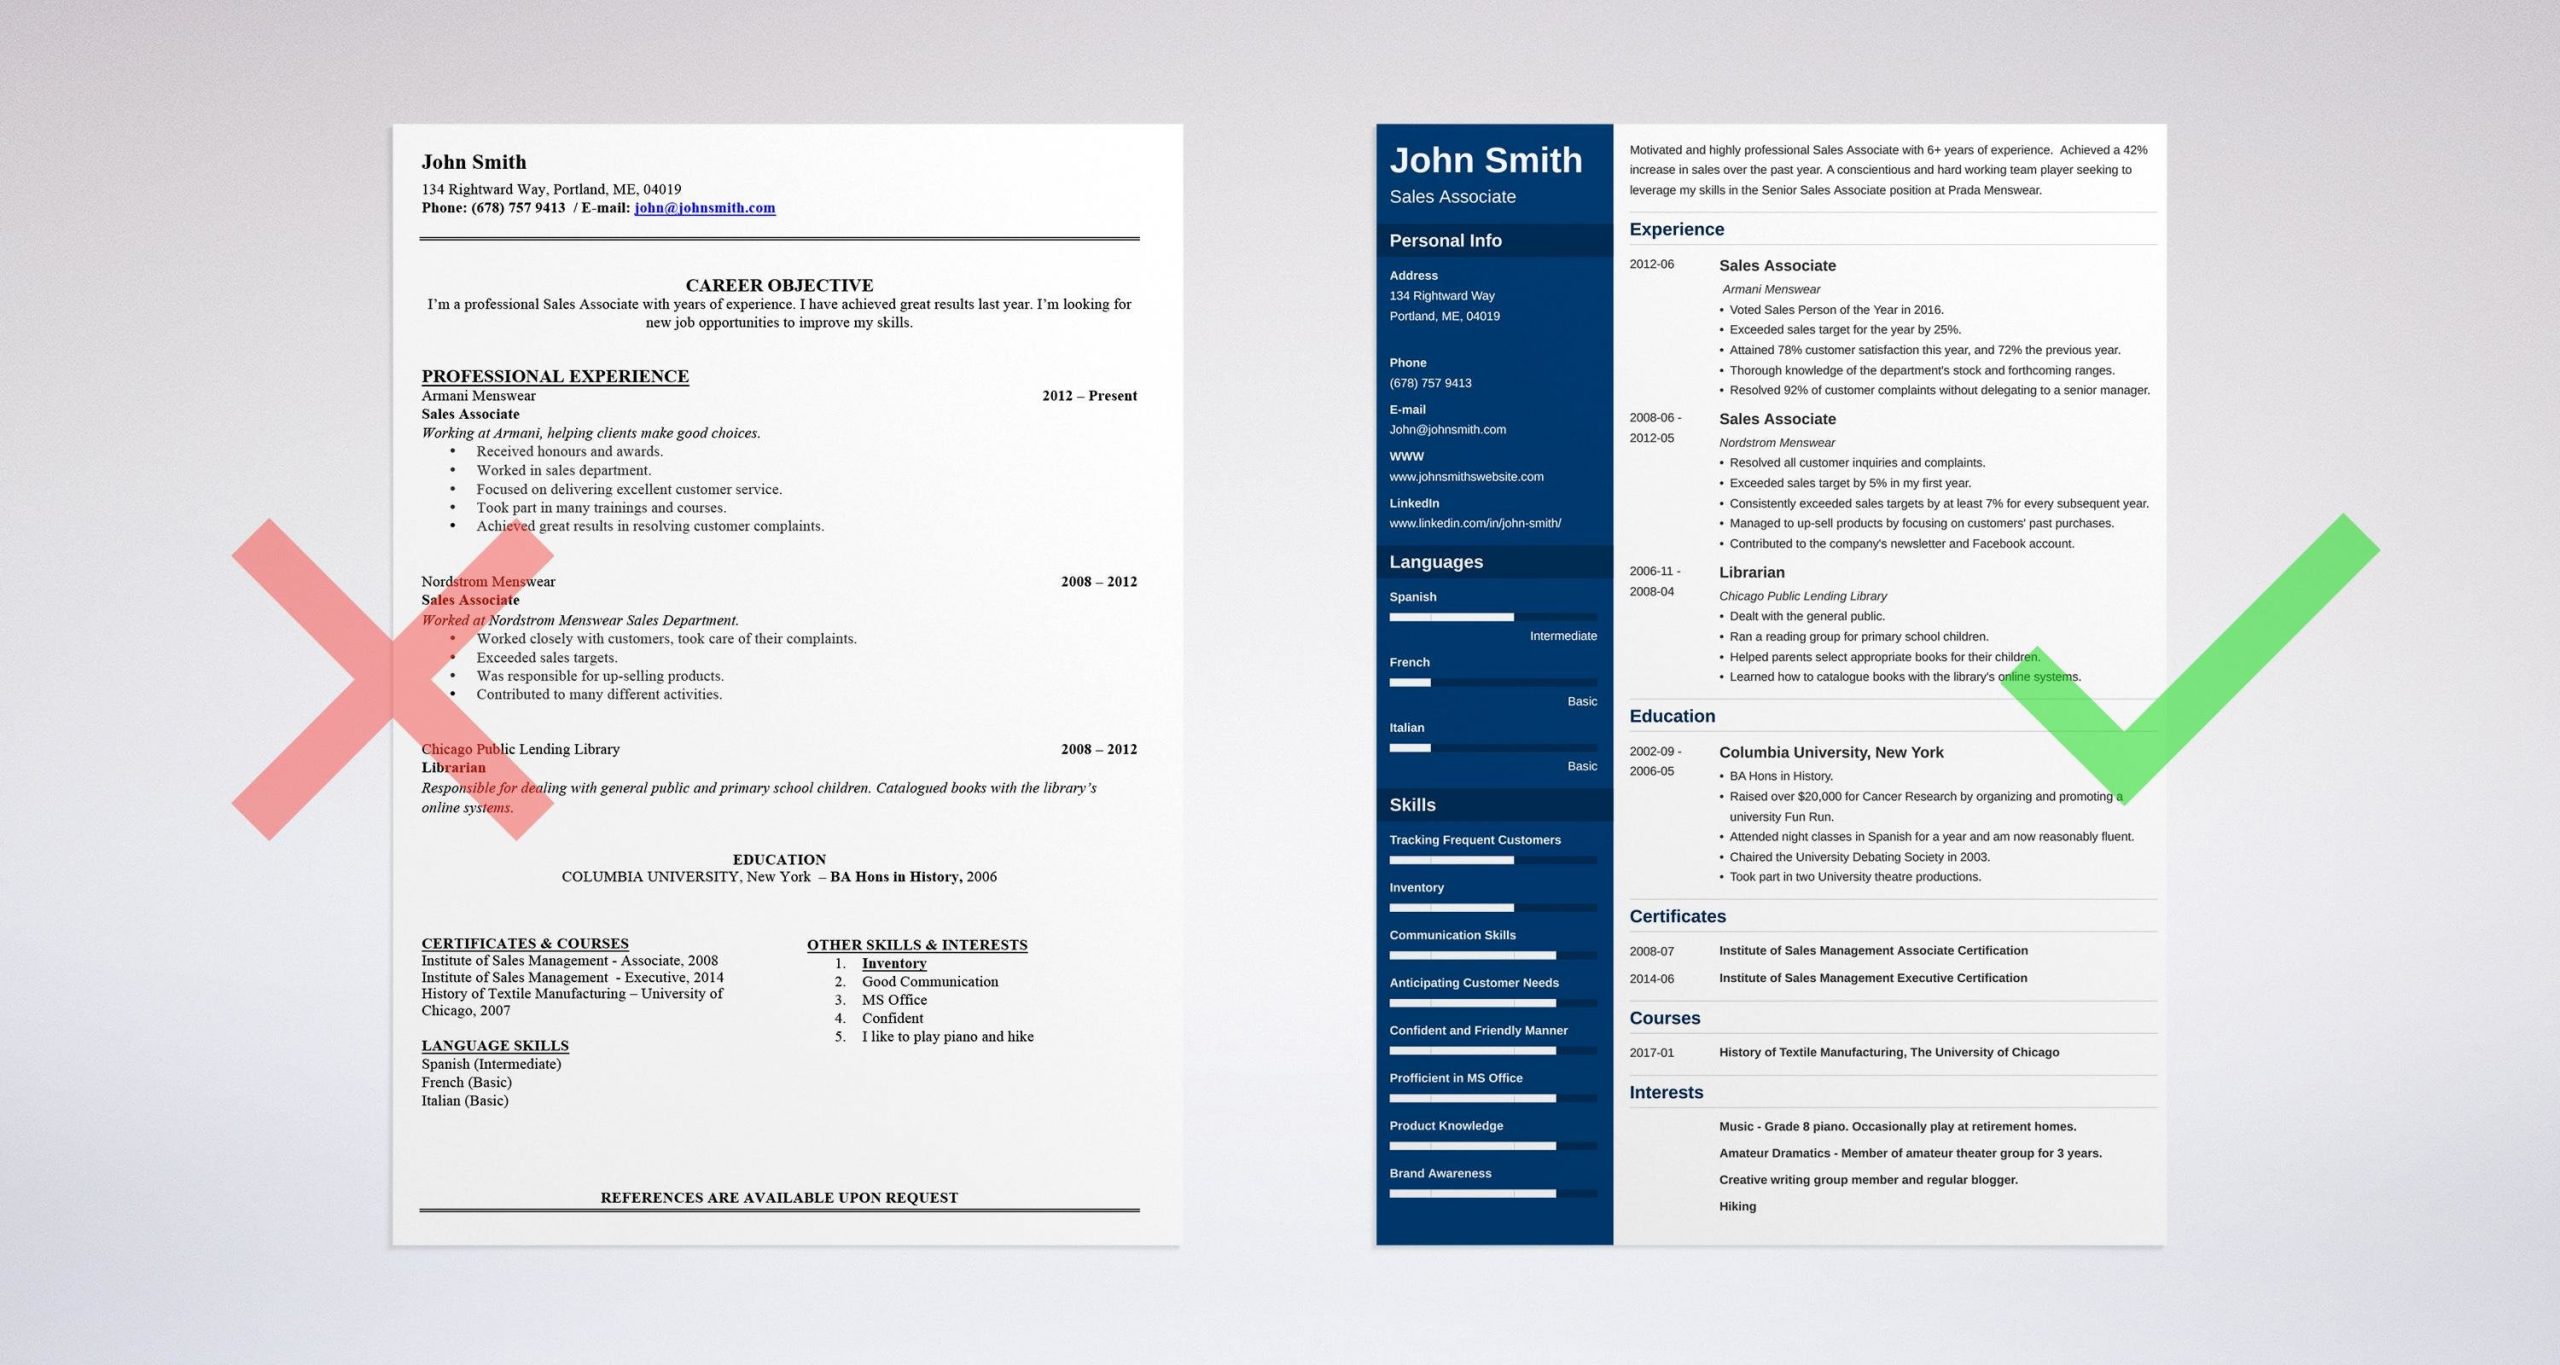 Sample Resume for Furniture Sales Position Sales associate Resume [example   Job Description]